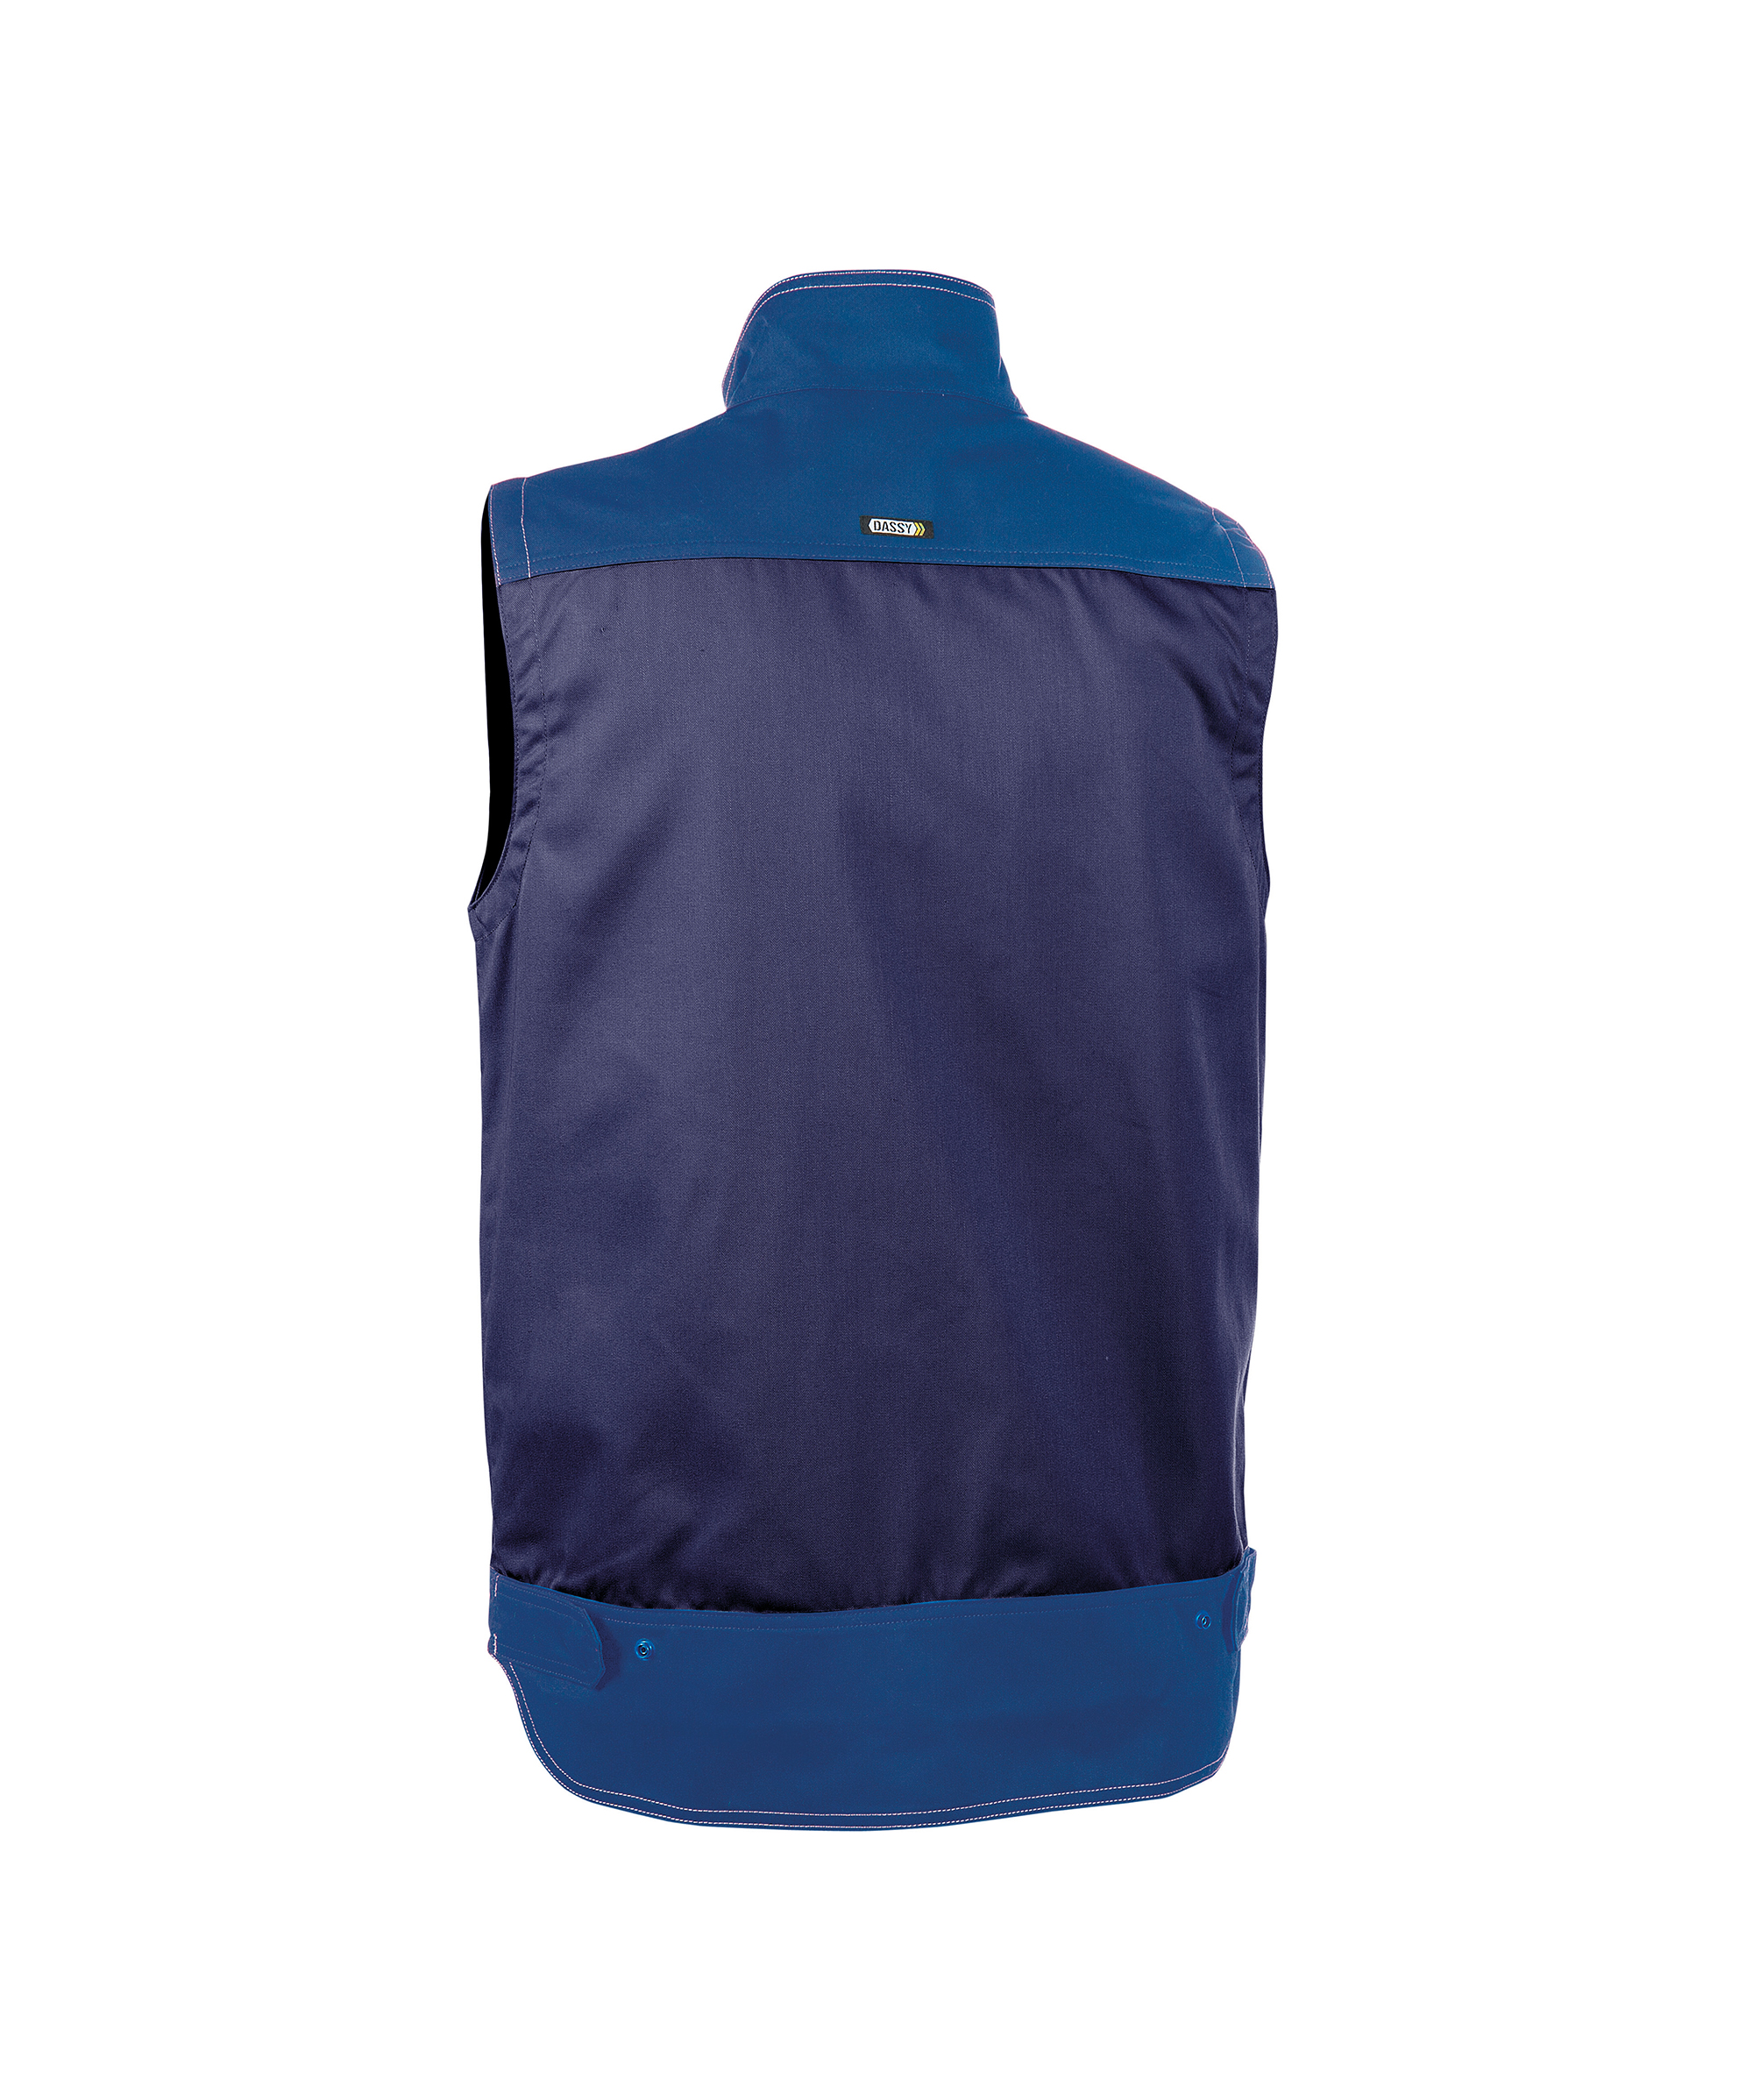 faro_two-tone-sleeveless-work-jacket_navy-royal-blue_back.jpg